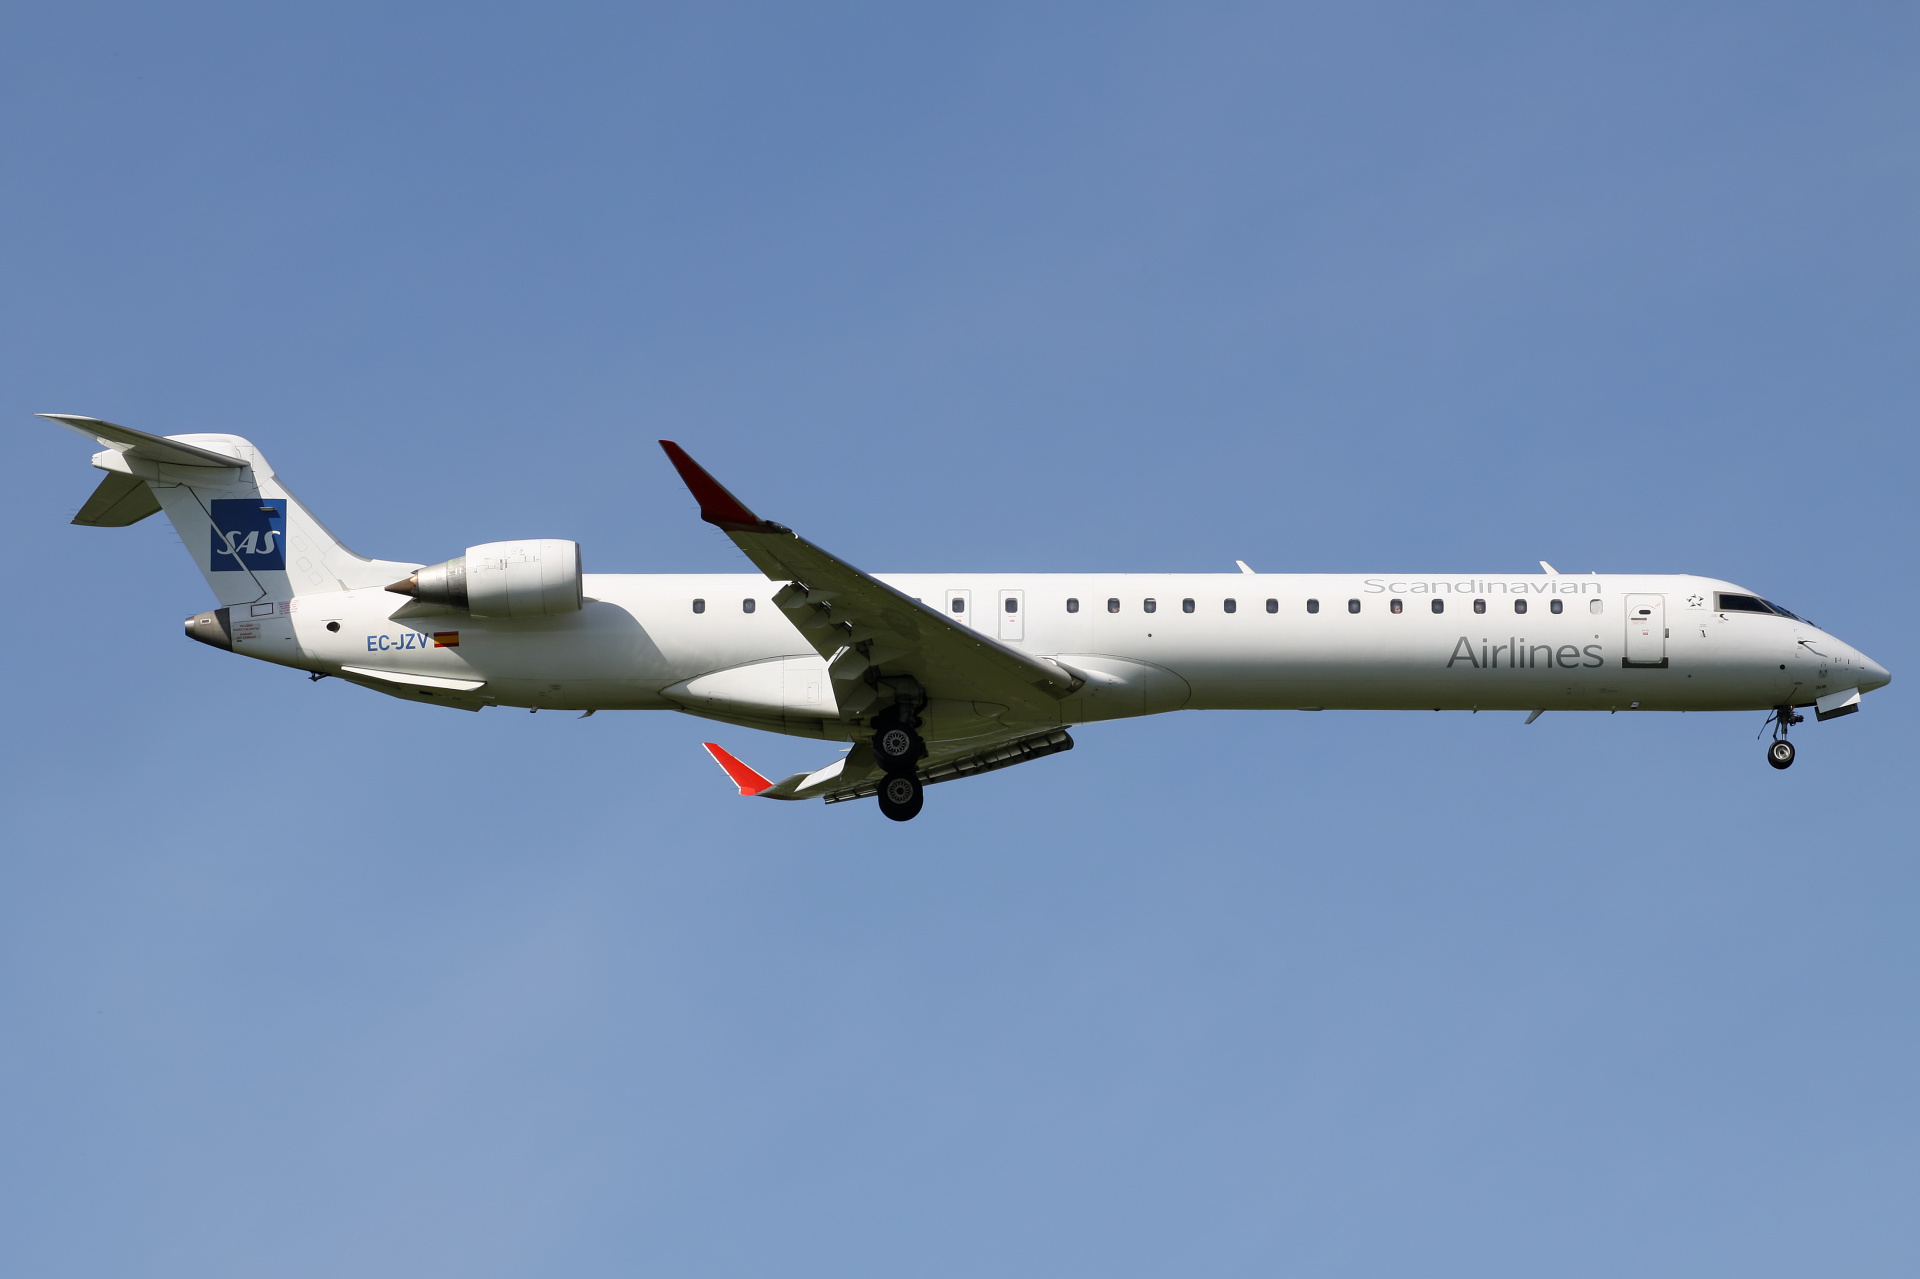 EC-JZV (Aircraft » EPWA Spotting » Mitsubishi Regional Jet » CRJ-900 » SAS Scandinavian Airlines)